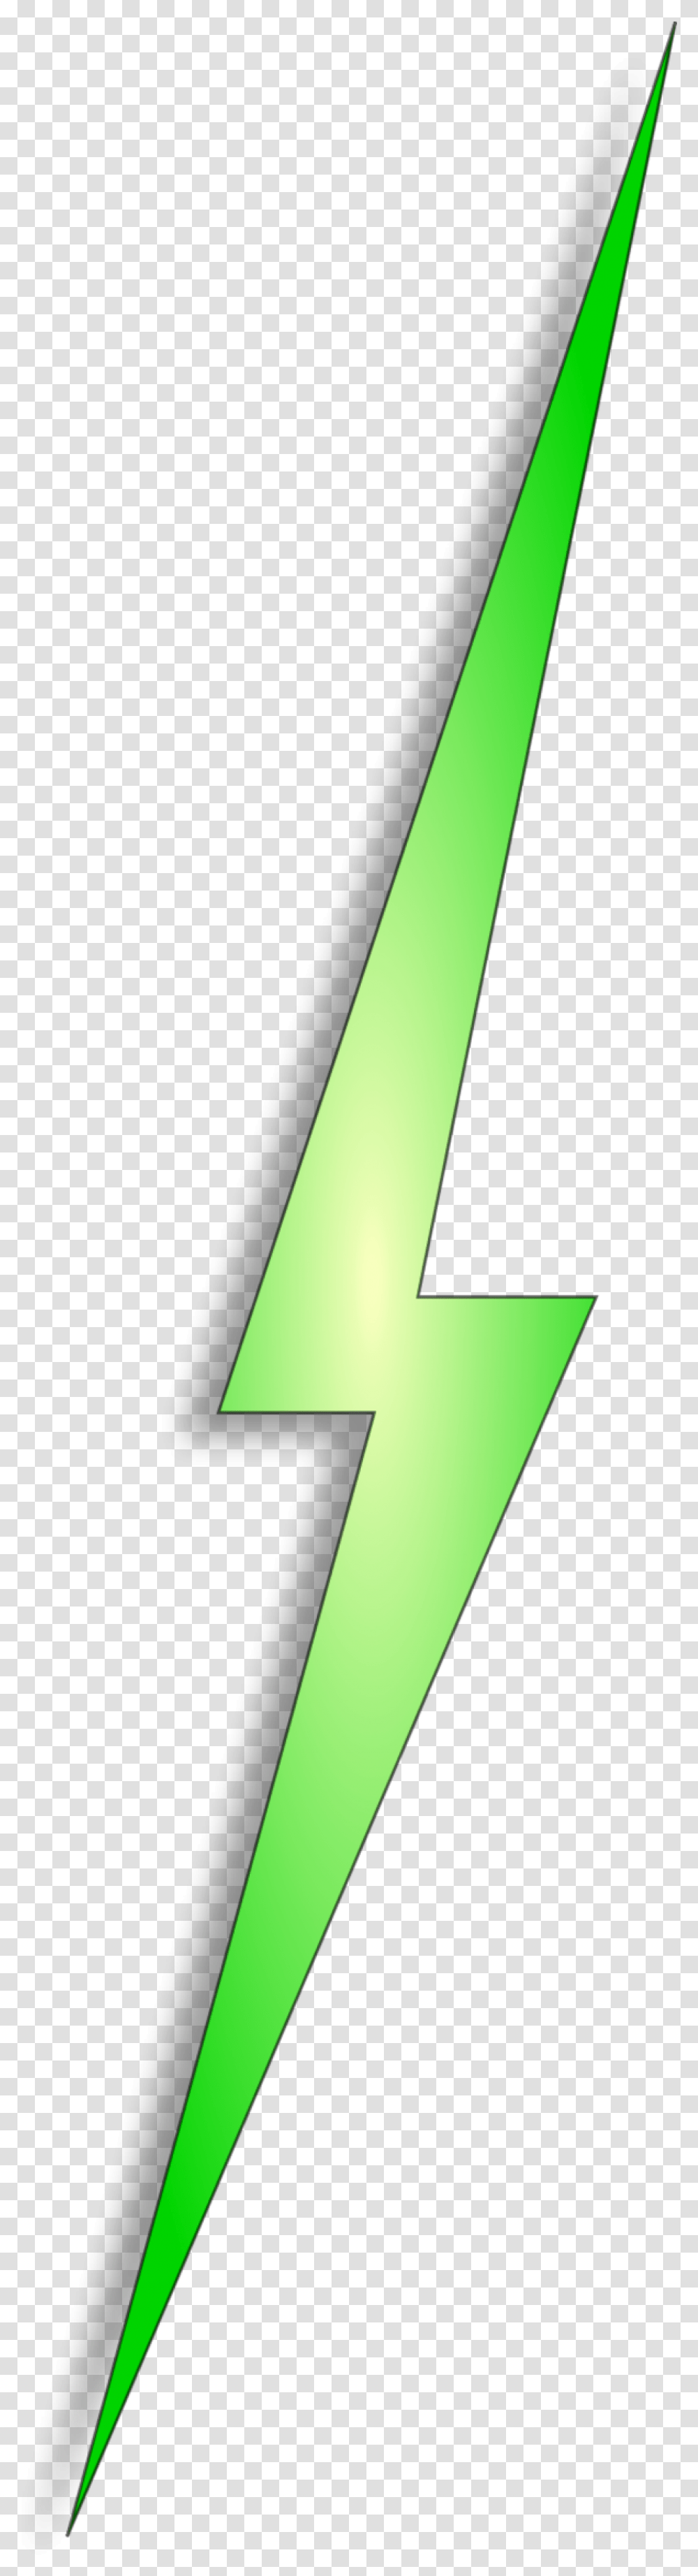 Arrow Green Lightning Bolt, Sword, Blade Transparent Png